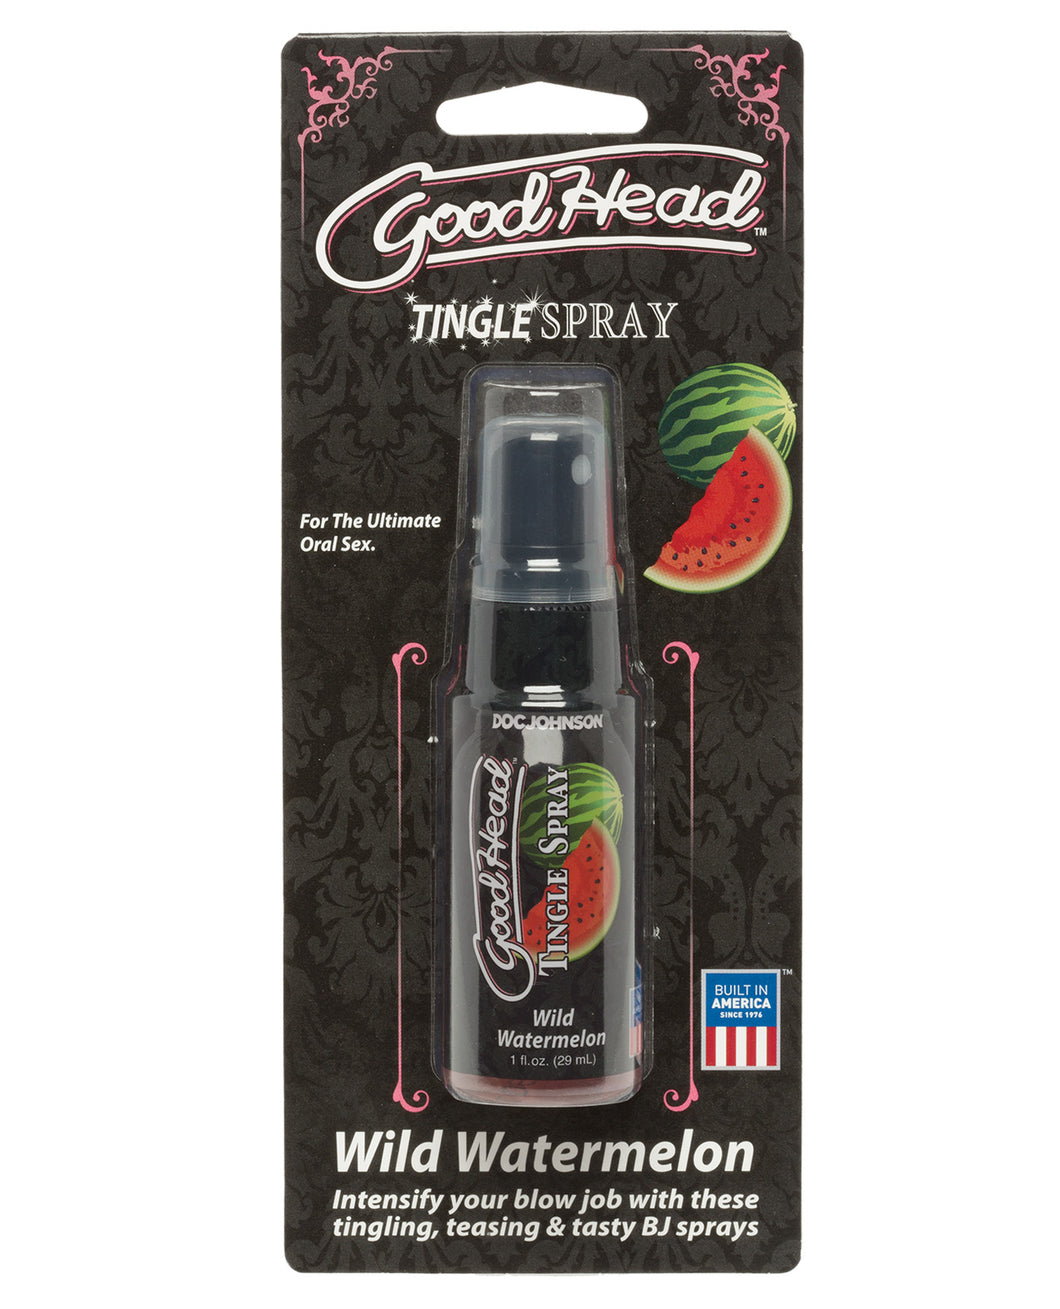 Good Head Tingle Spray - Wild Watermelon